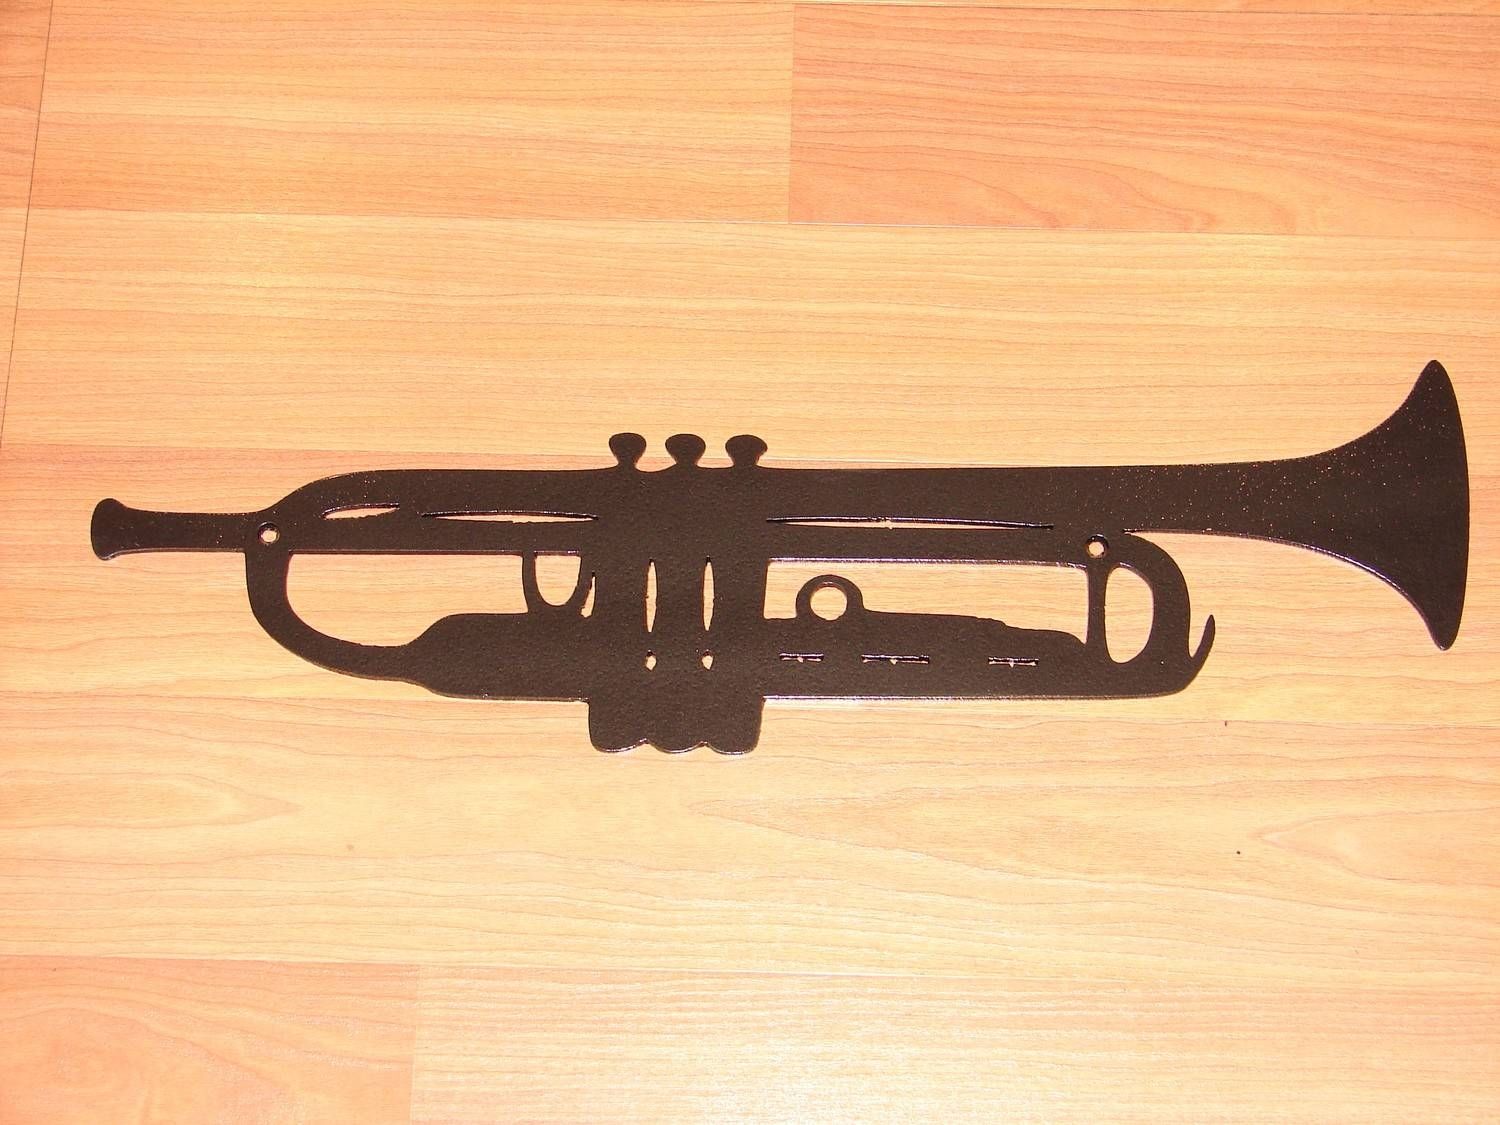 Trumpet Metal Wall Art Decor Music Jazz Instrument Band Regarding Latest Musical Metal Wall Art (View 16 of 20)